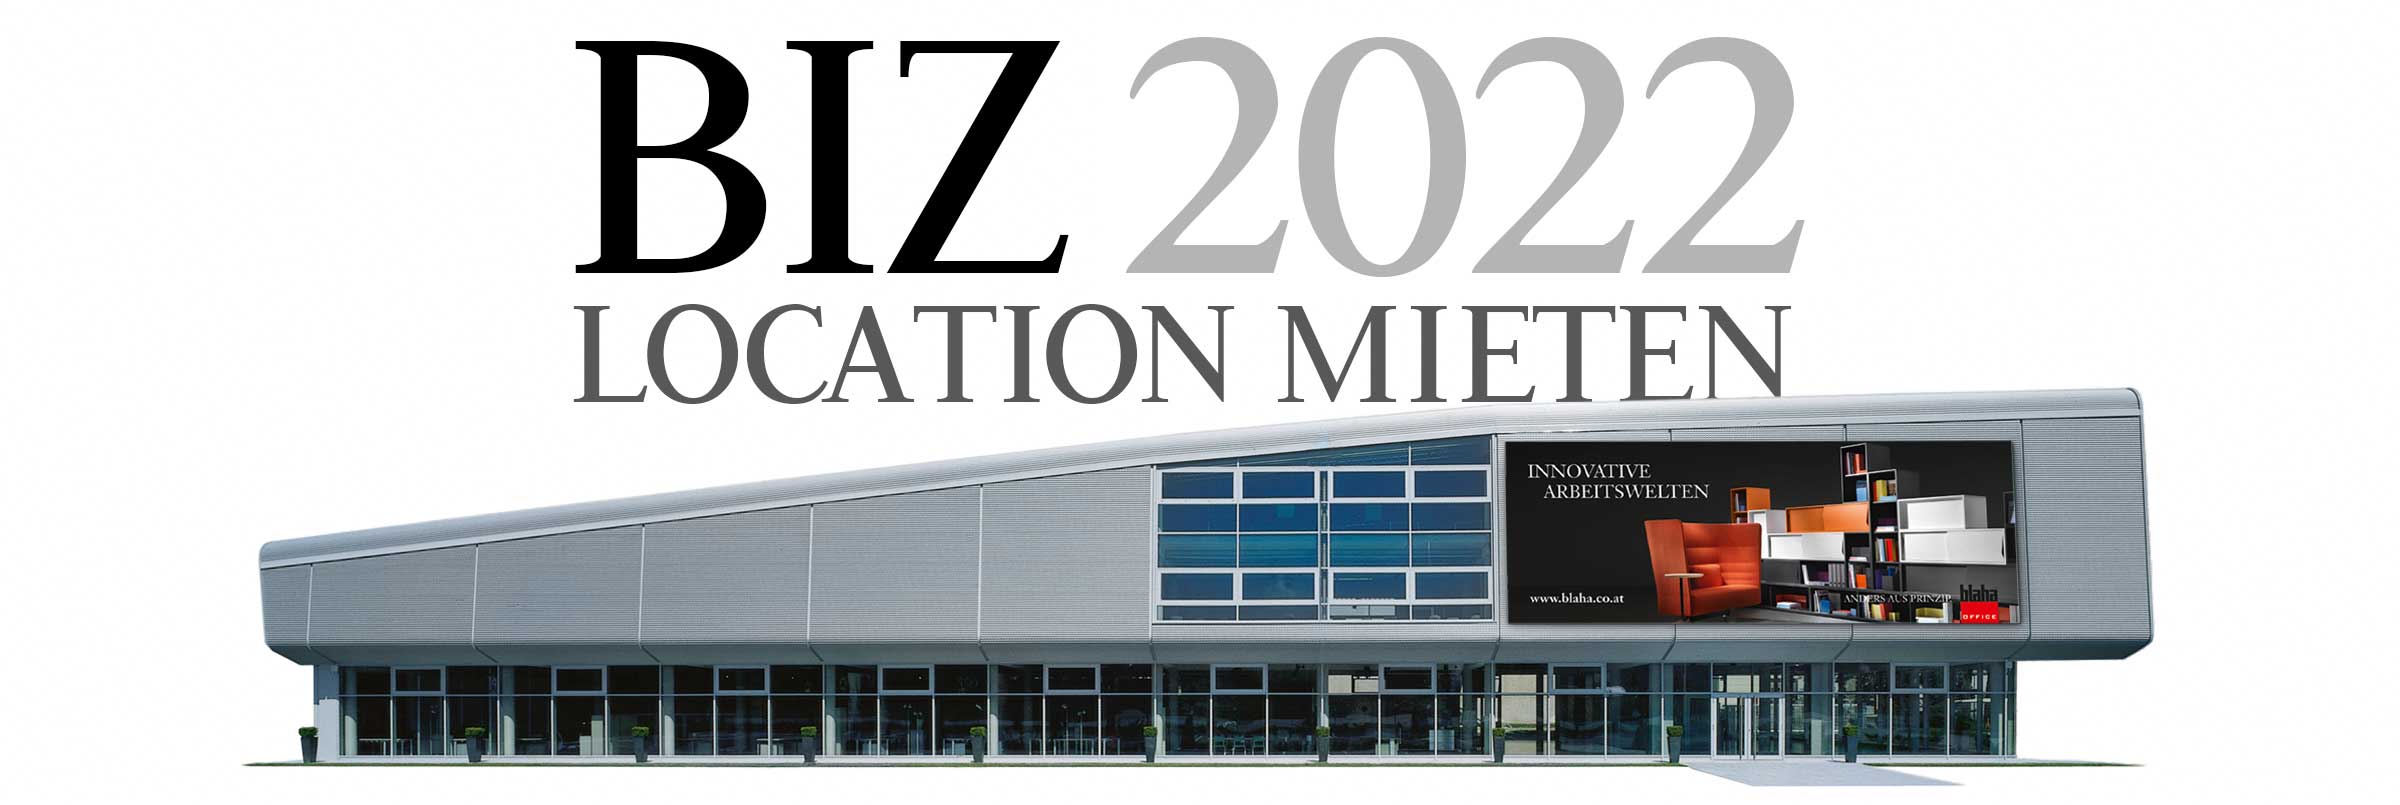 f21 header 2022 2400 locationmieten